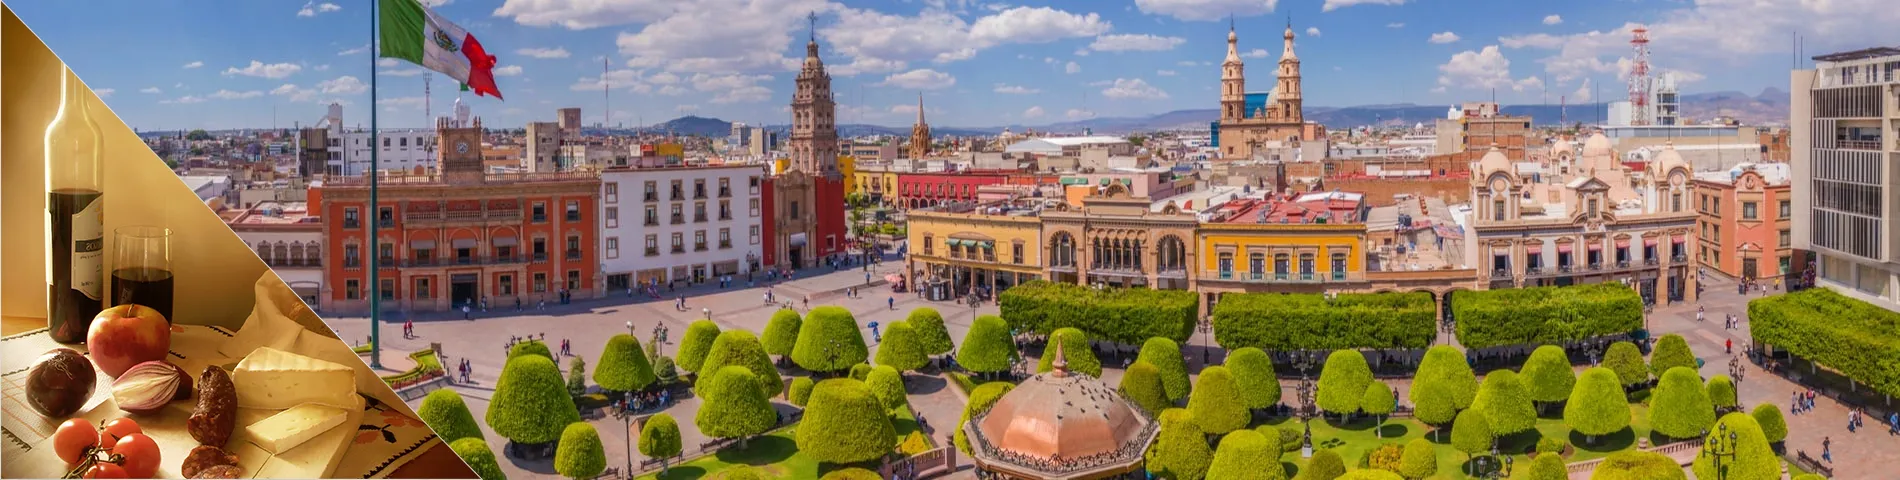 Guanajuato - Espanhol & Cultura 